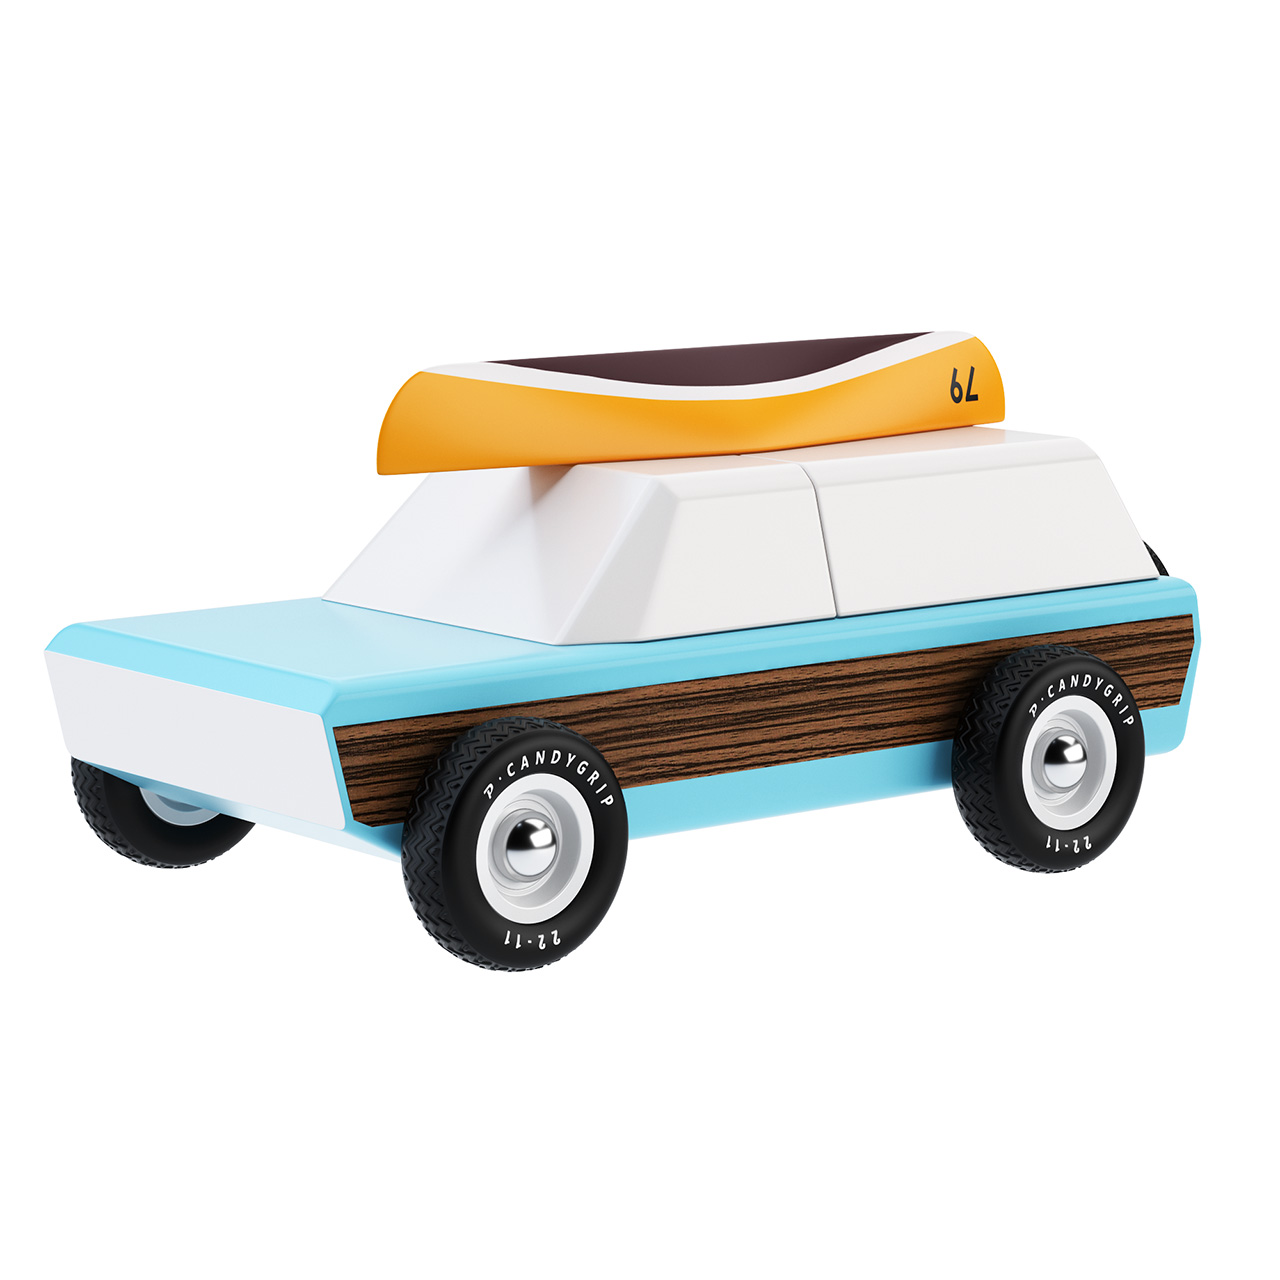 pioneer-classic-toy-car-by-candylab.jpg